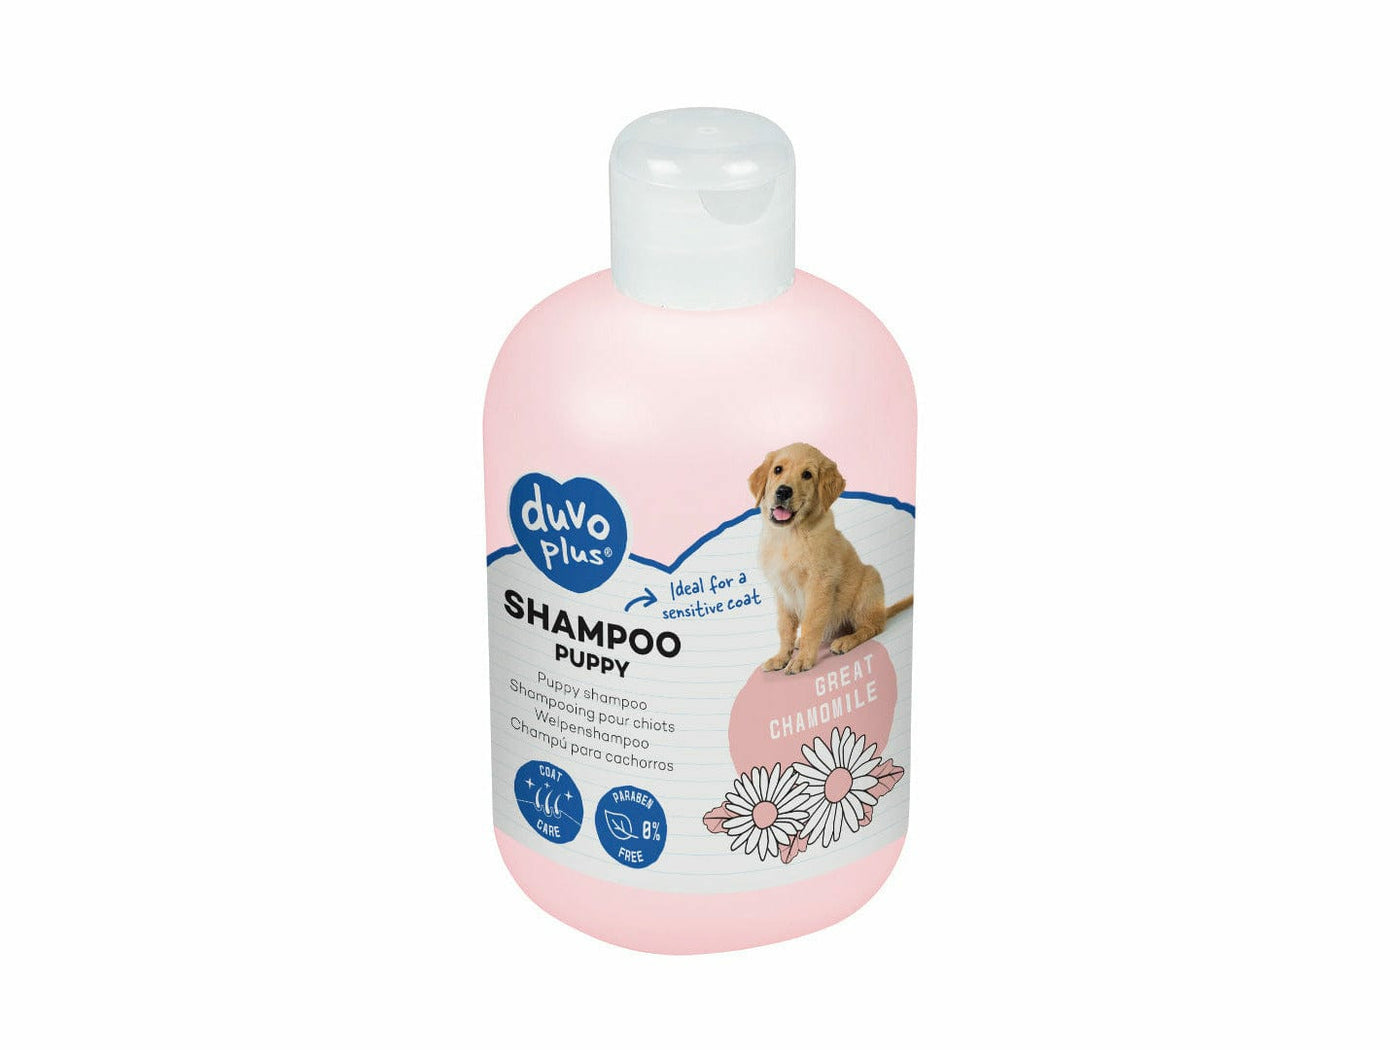 Shampoo Puppy 250ml